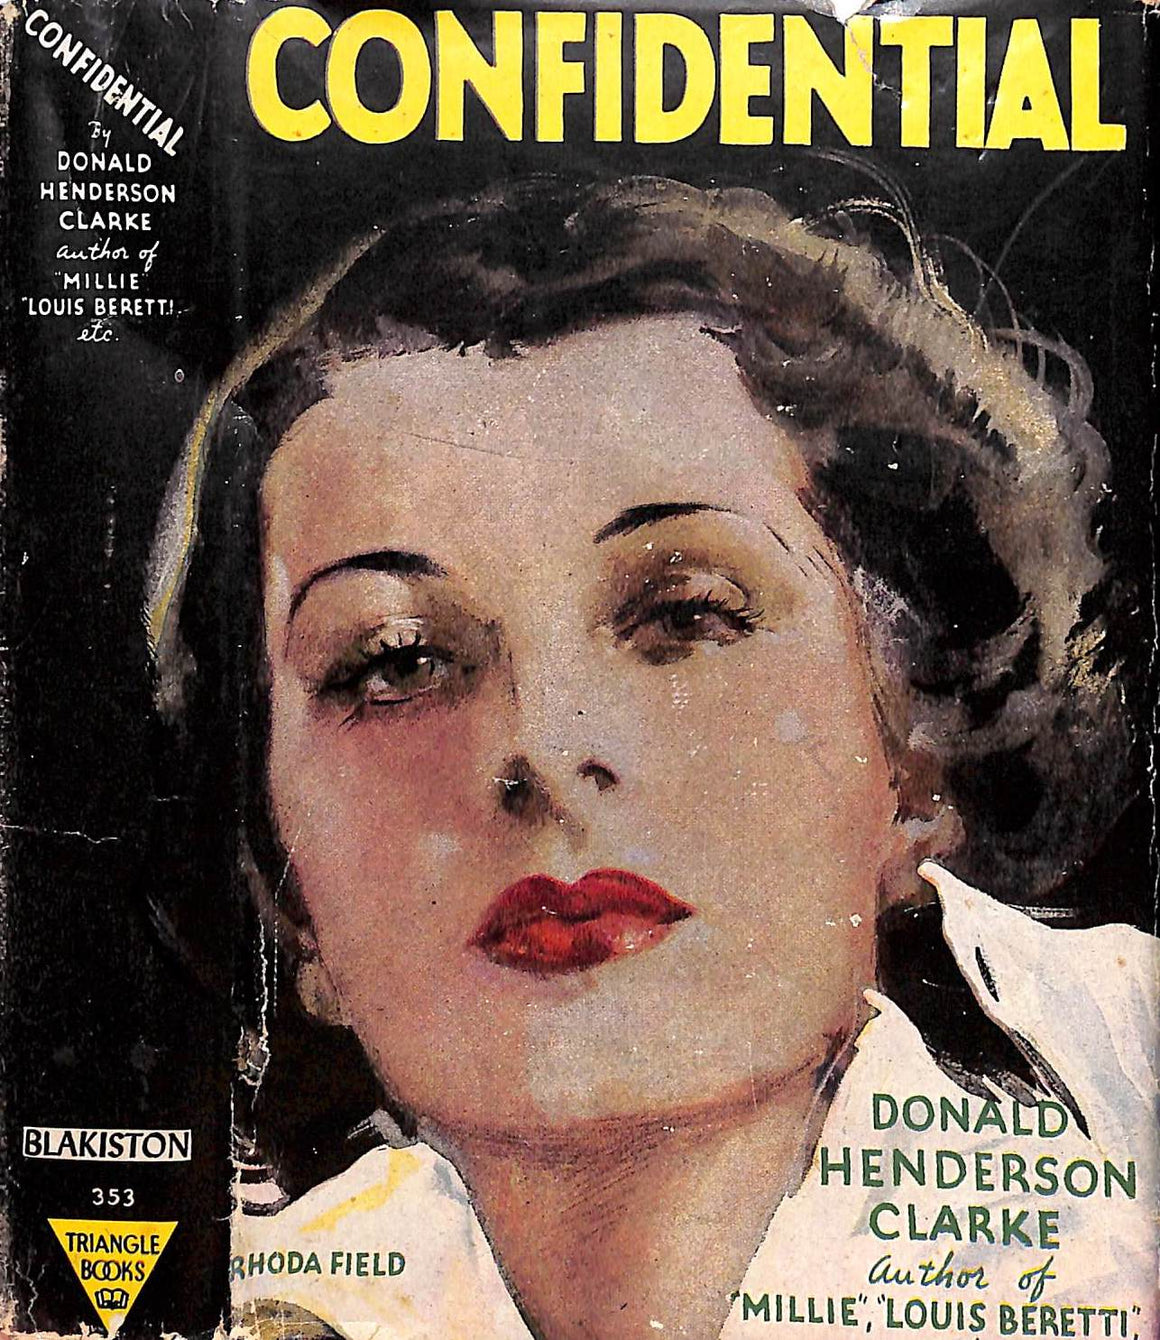 "Confidential" 1944 CLARKE, Donald Henderson